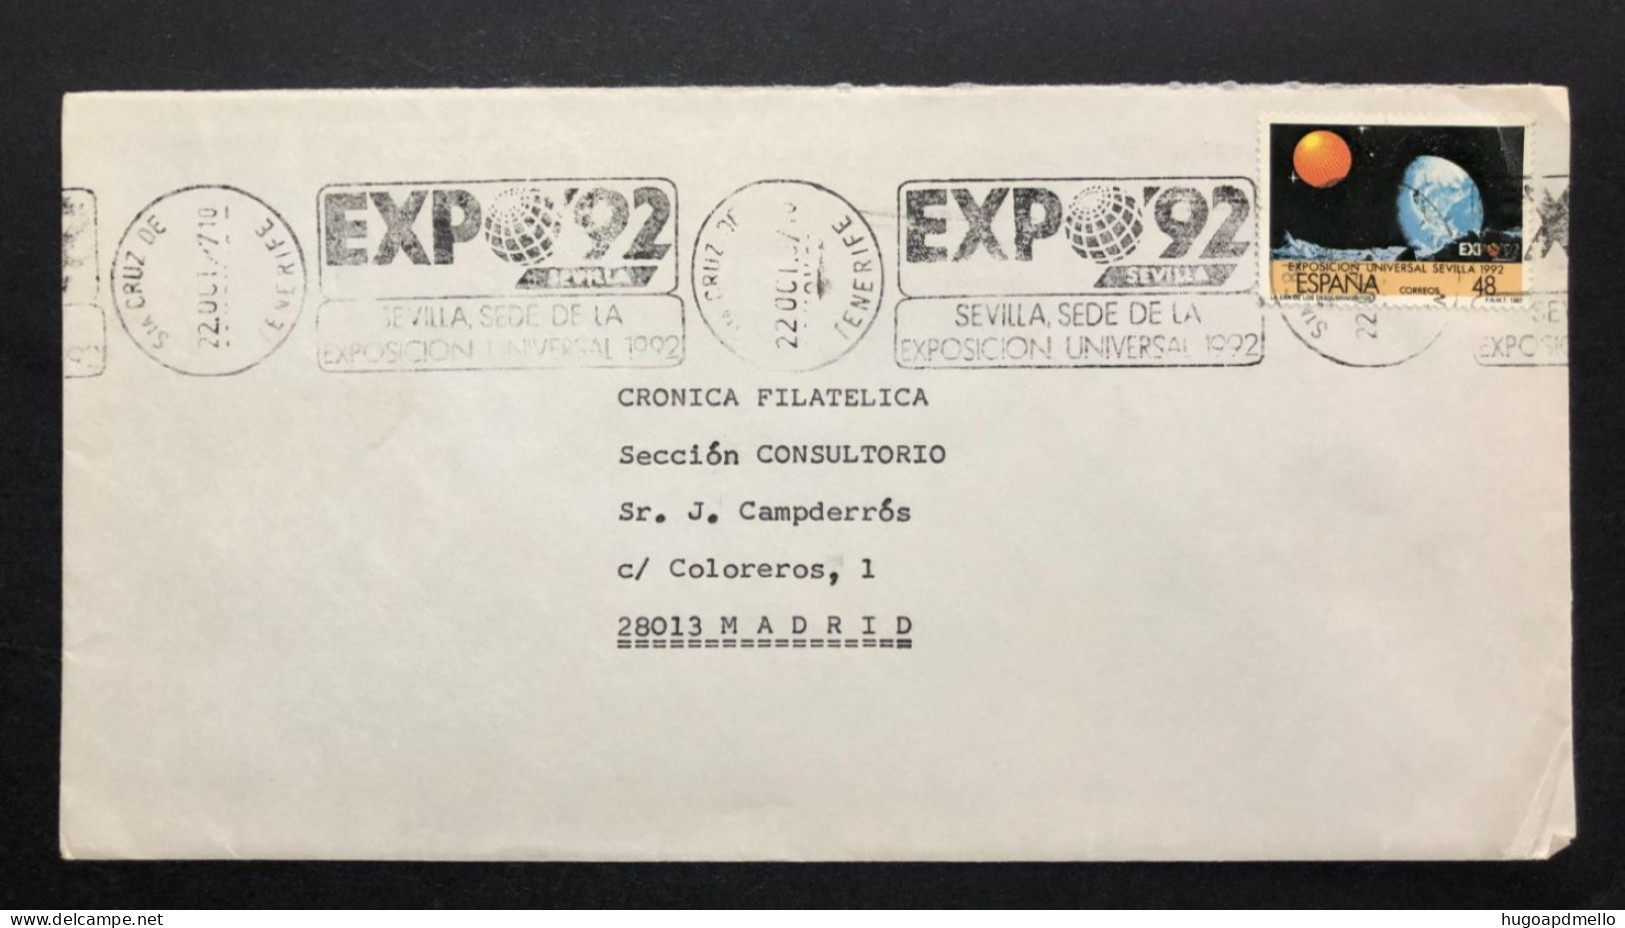 SPAIN, Cover With Special Cancellation « EXPO '92 », « STA. CRUZ De TENERIFE Postmark », 1987 - 1992 – Séville (Espagne)